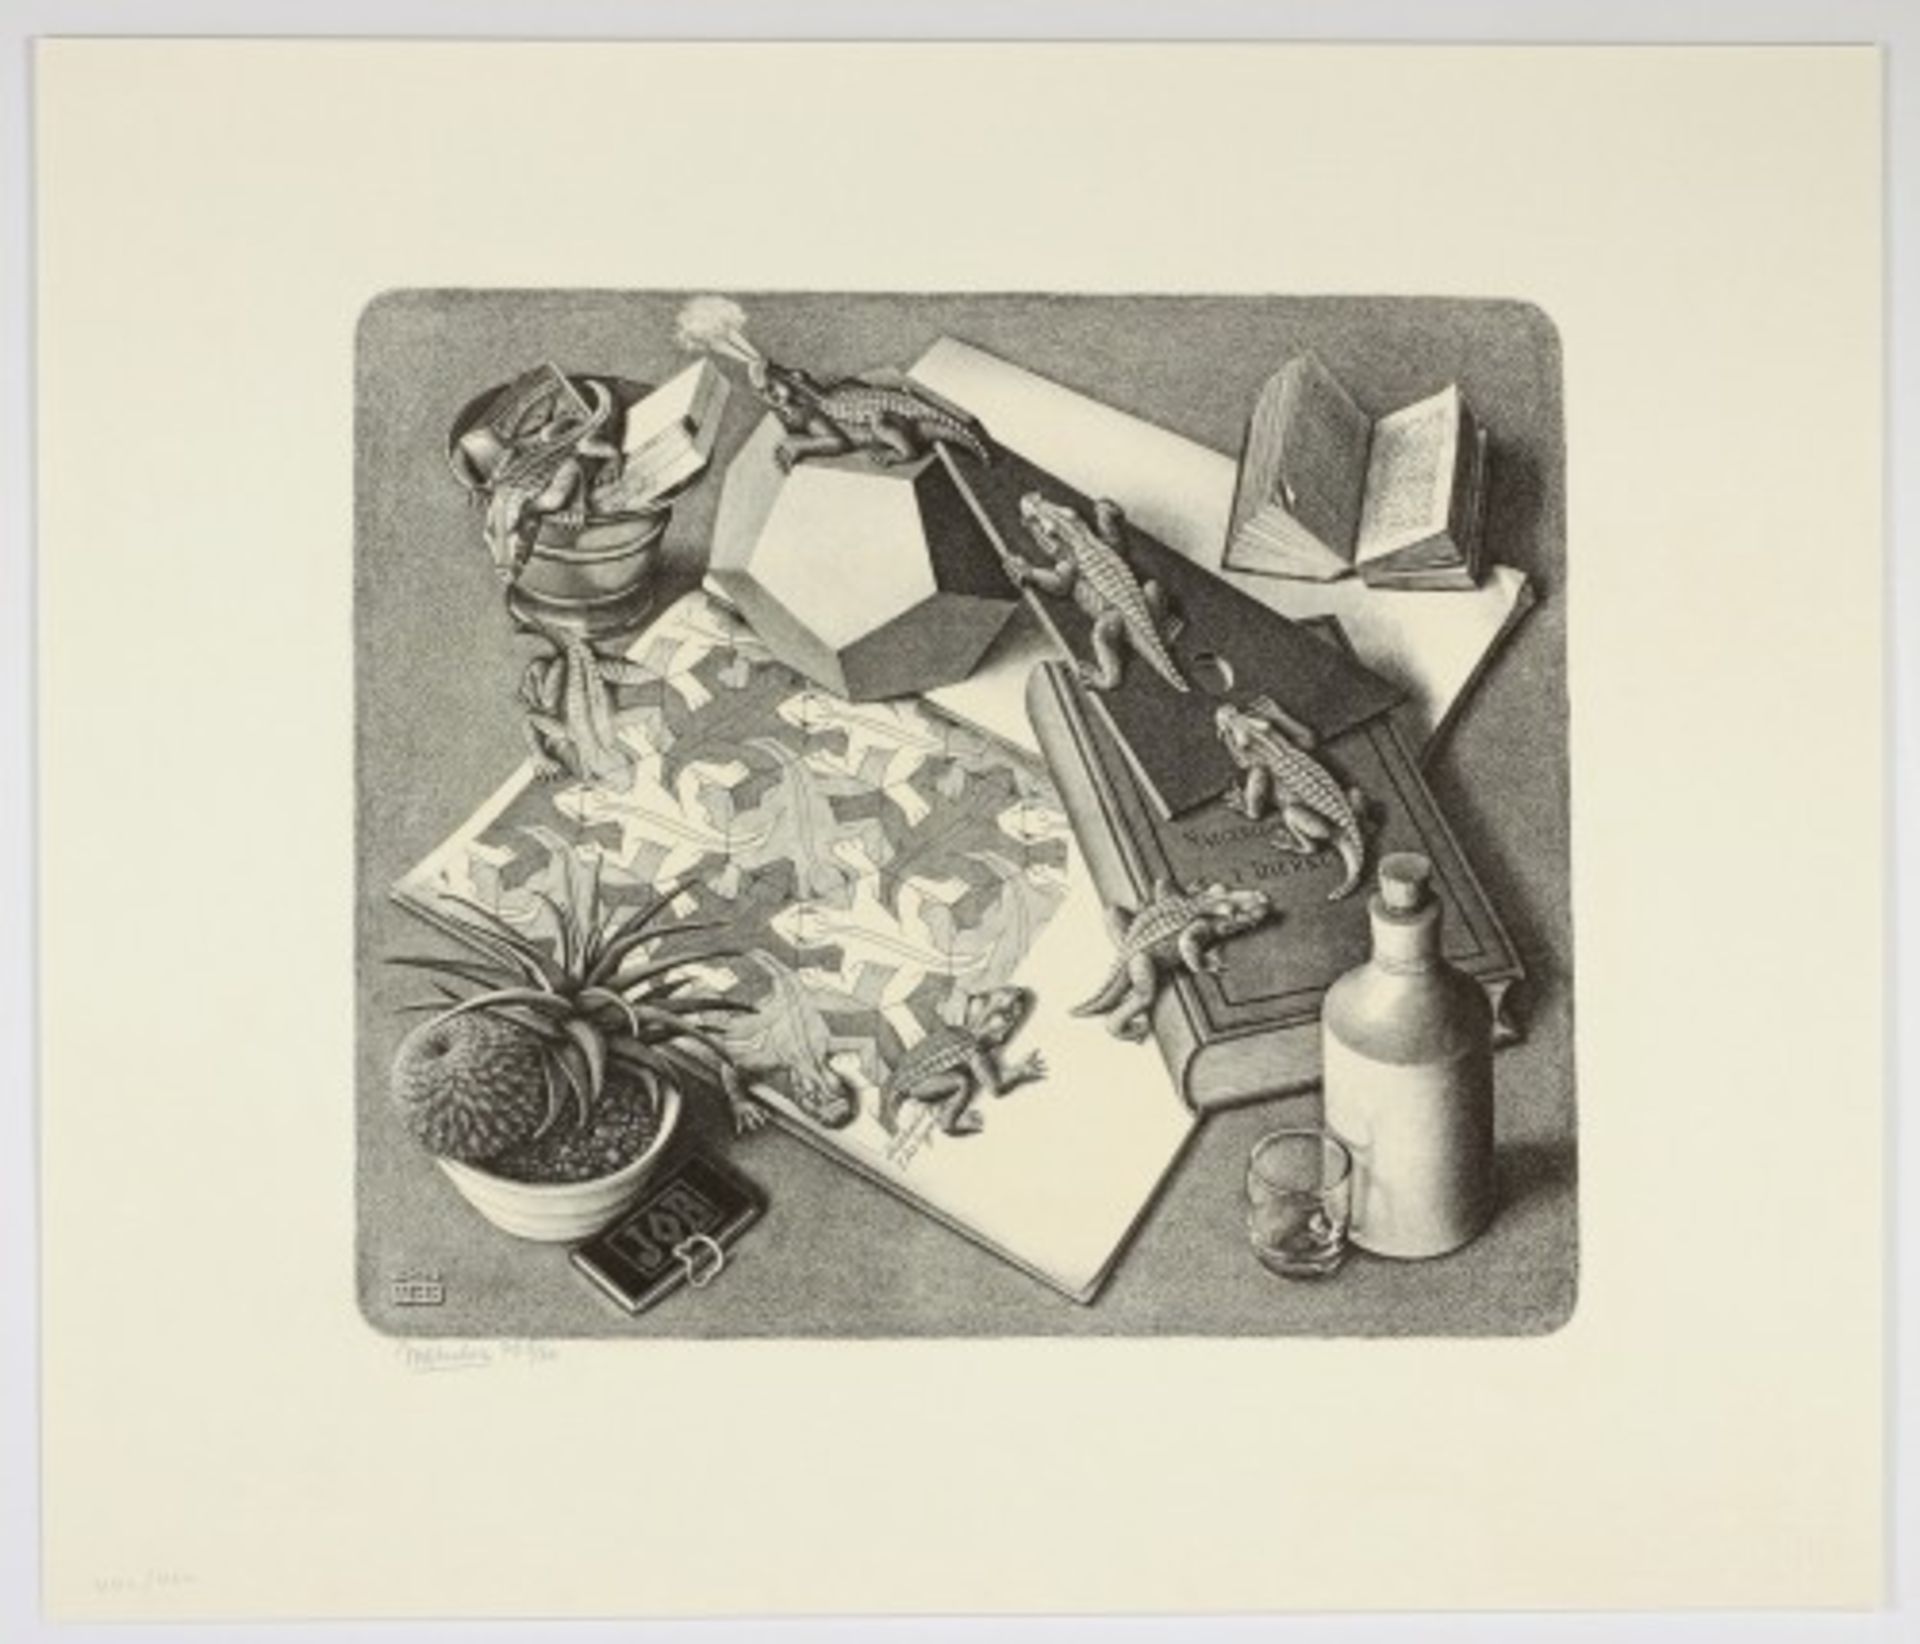 M.C. Escher "Reptiles" Etching